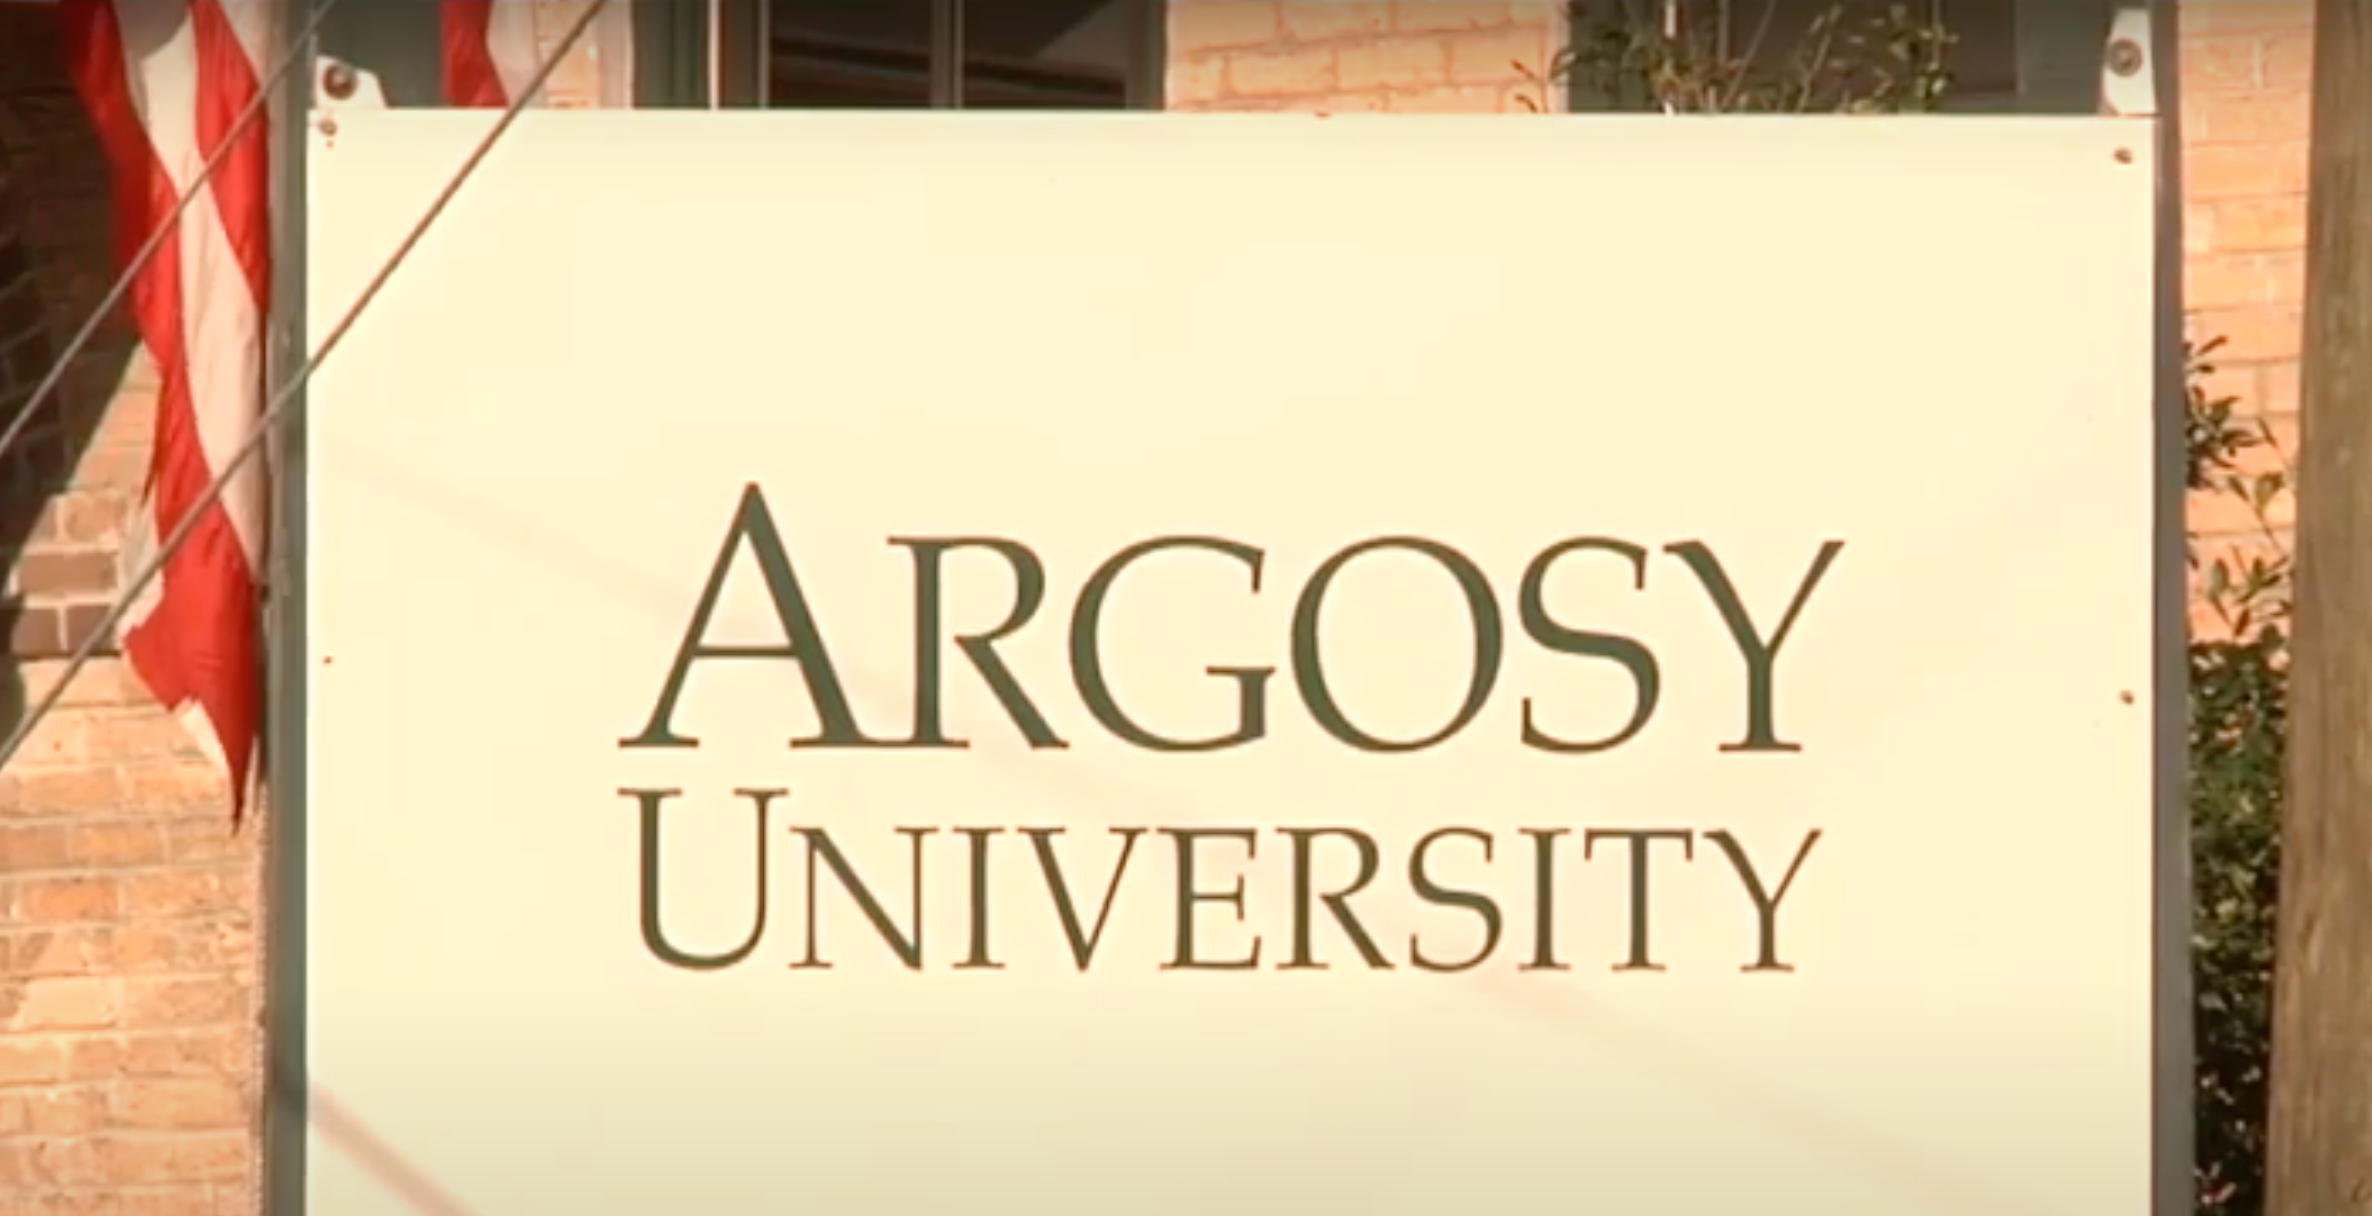 Argosy University shut its doors in 2019